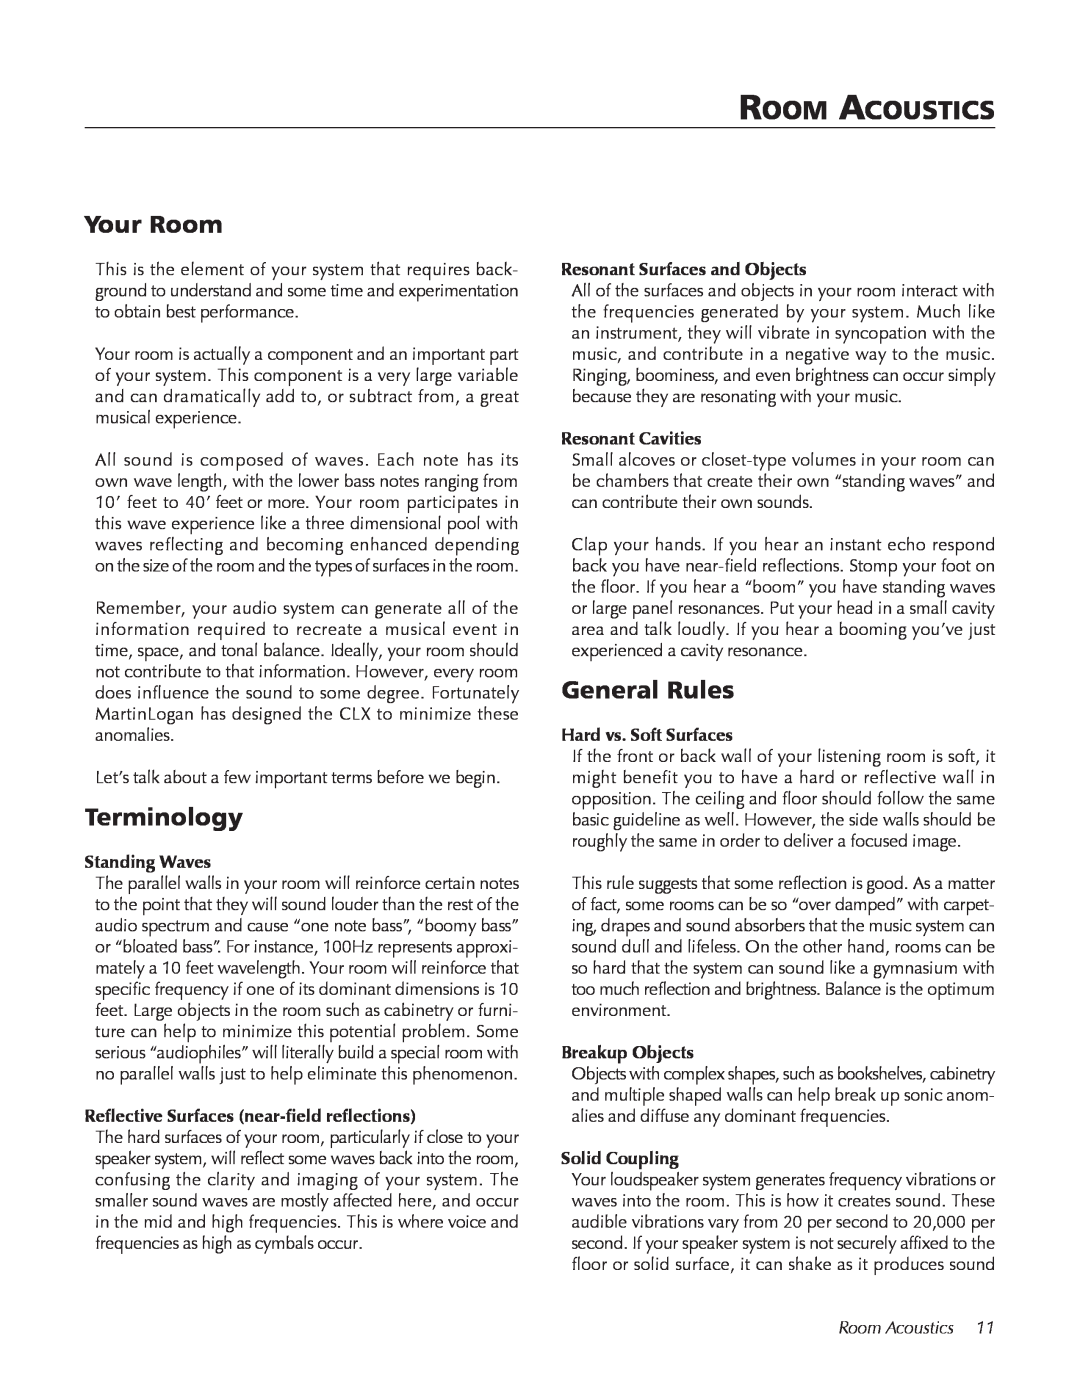 MartinLogan CLX user manual Room Acoustics, Your Room, Terminology, General Rules 